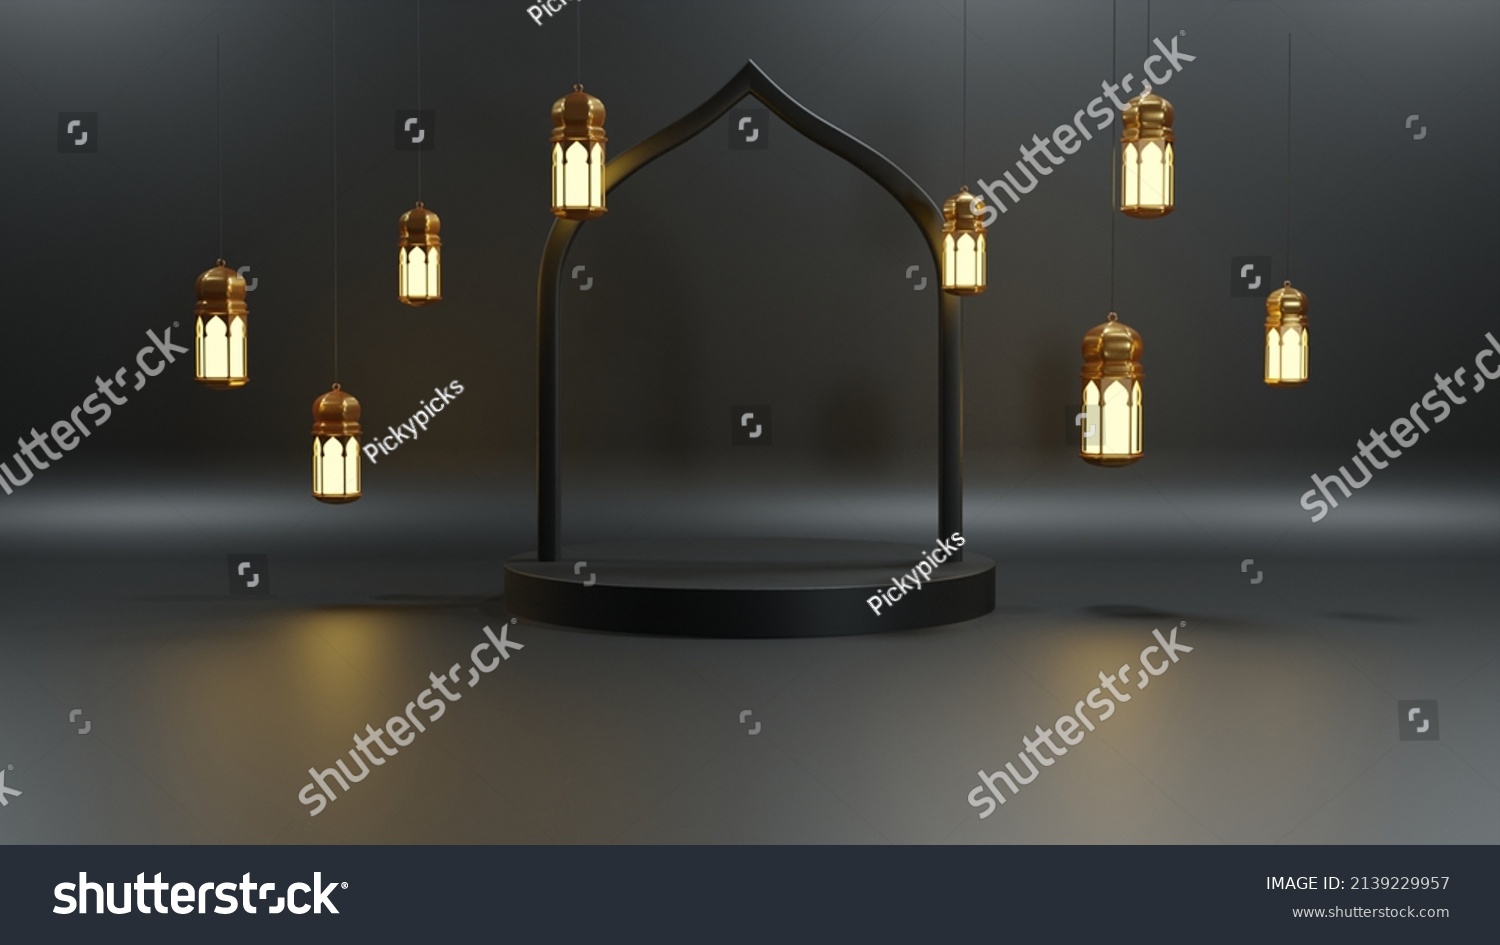 Islamic decoration background with lantern and crescent moon luxury style, ramadan kareem, mawlid, iftar, isra miraj, eid al fitr adha, muharram, copy space text area, 3D illustration. #2139229957